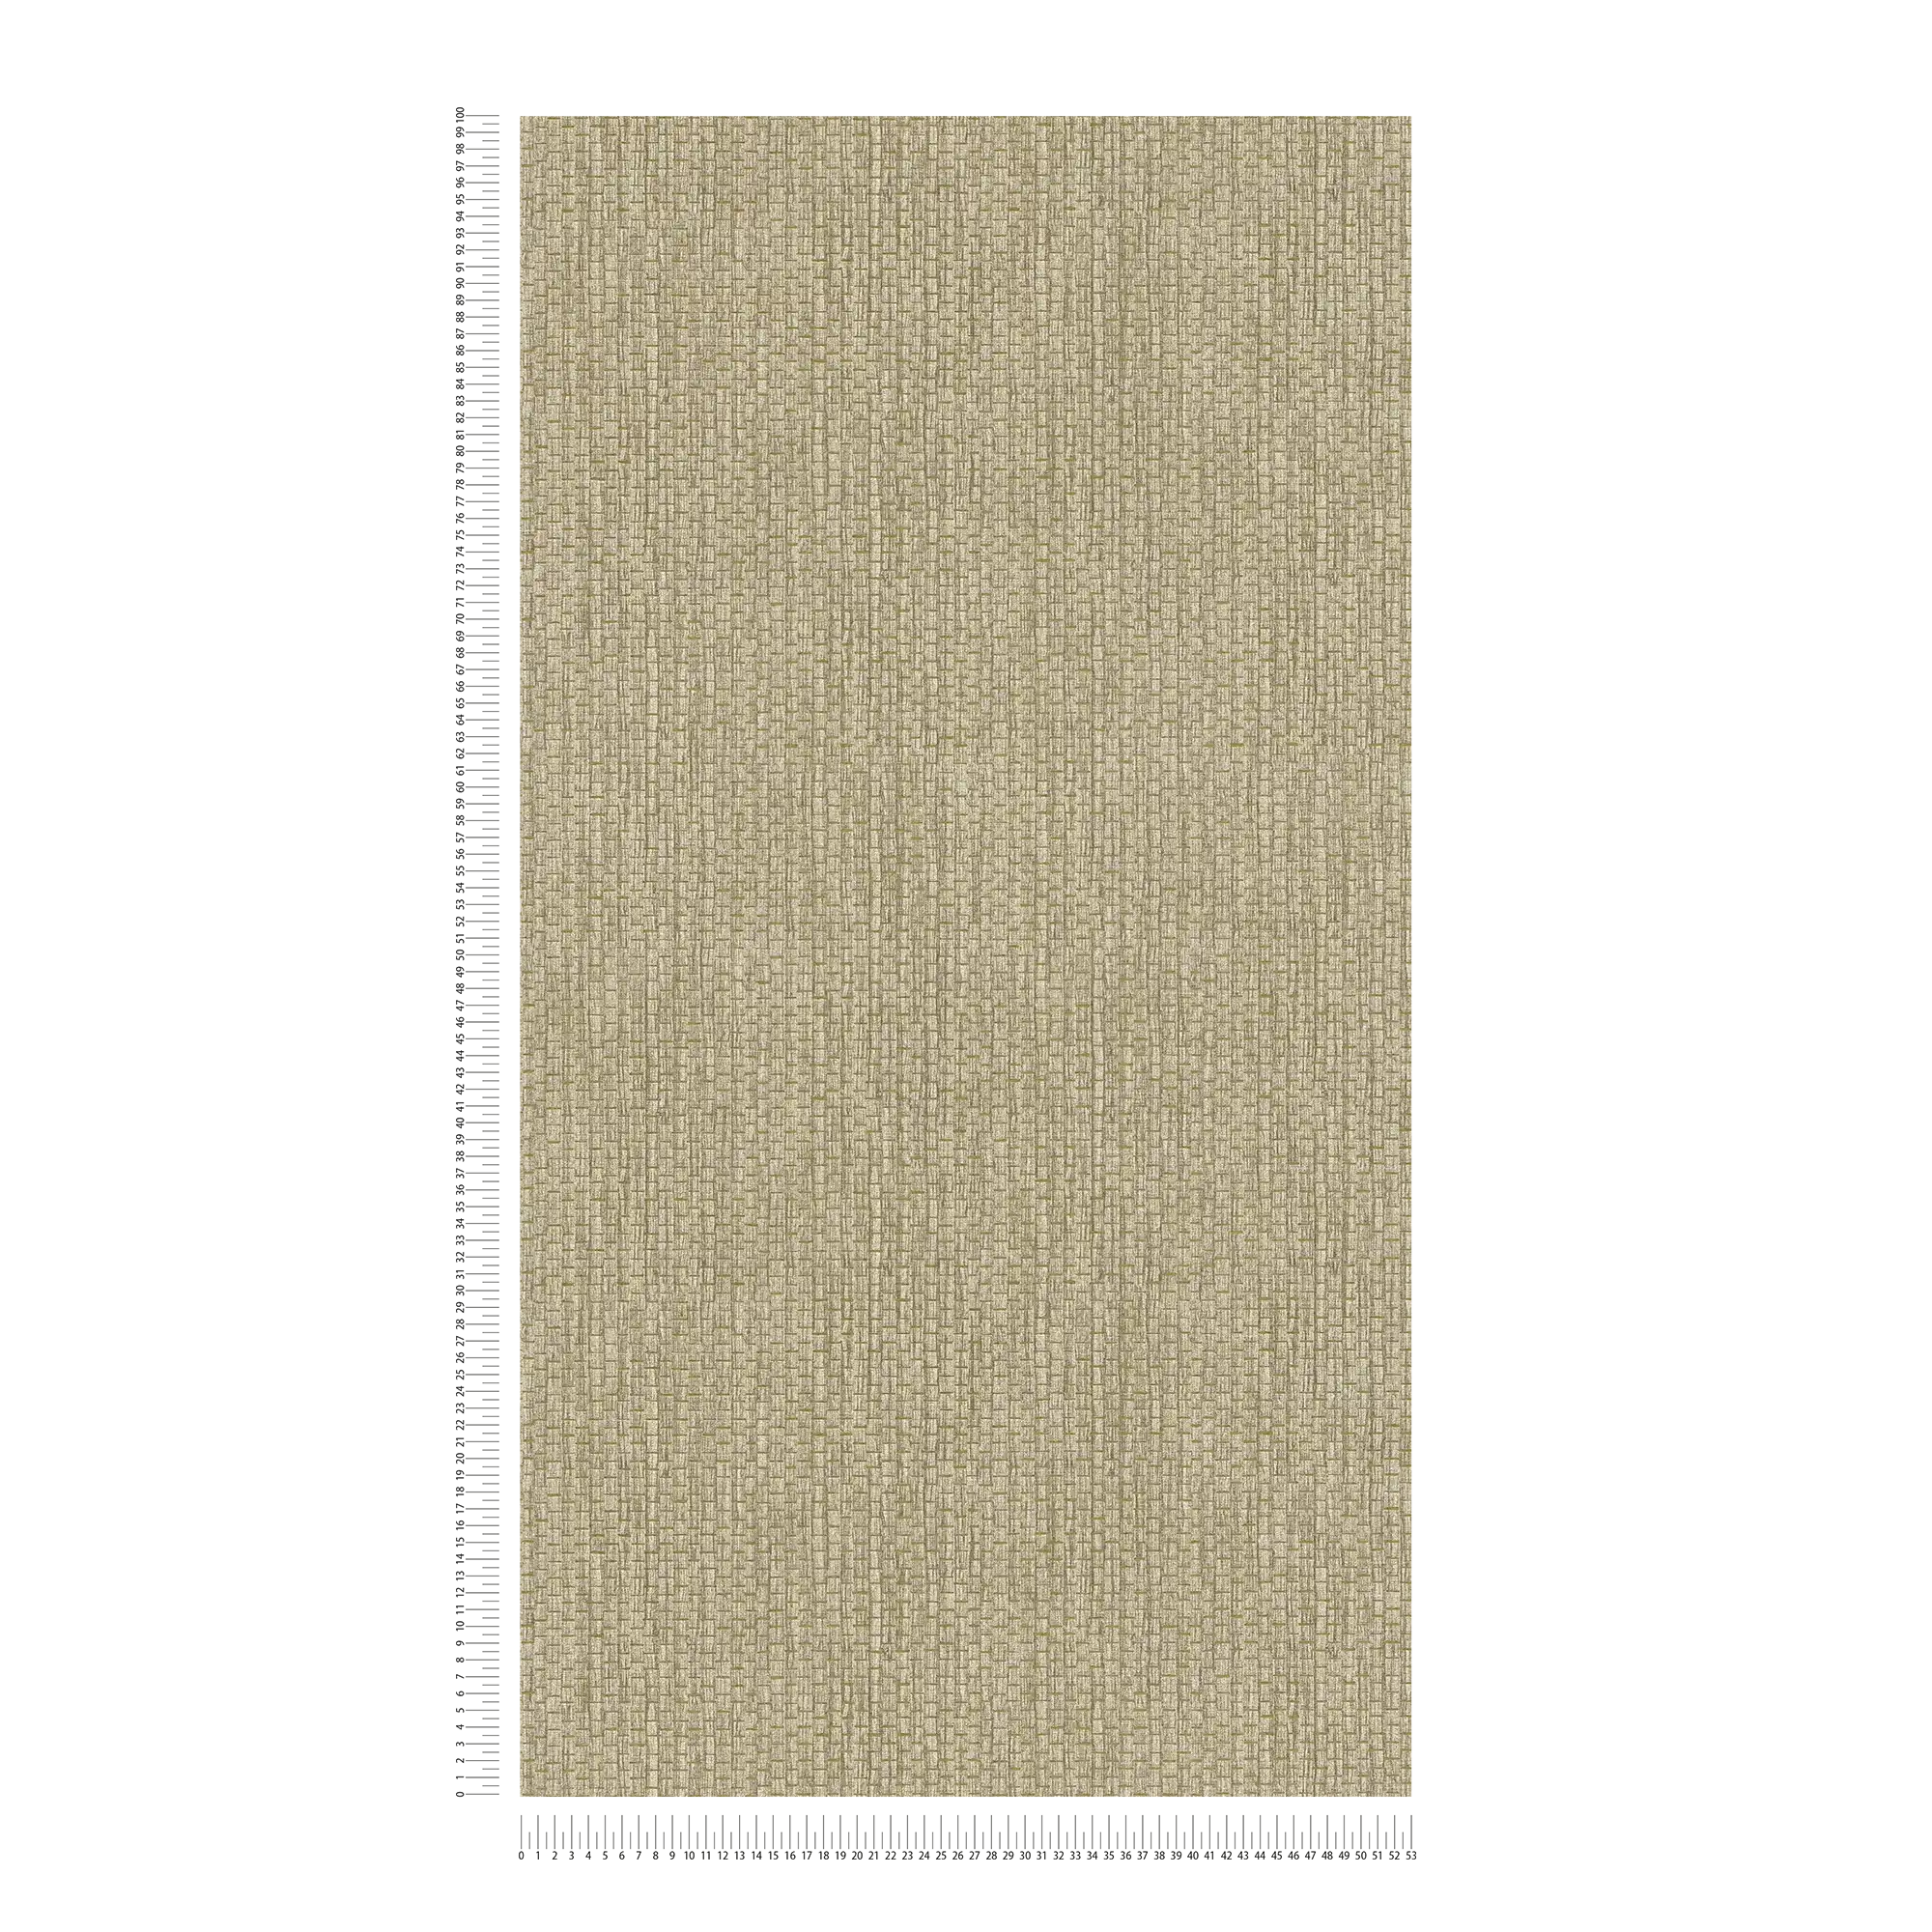             Carta da parati naturale con design a stuoia di canne - beige, grigio
        